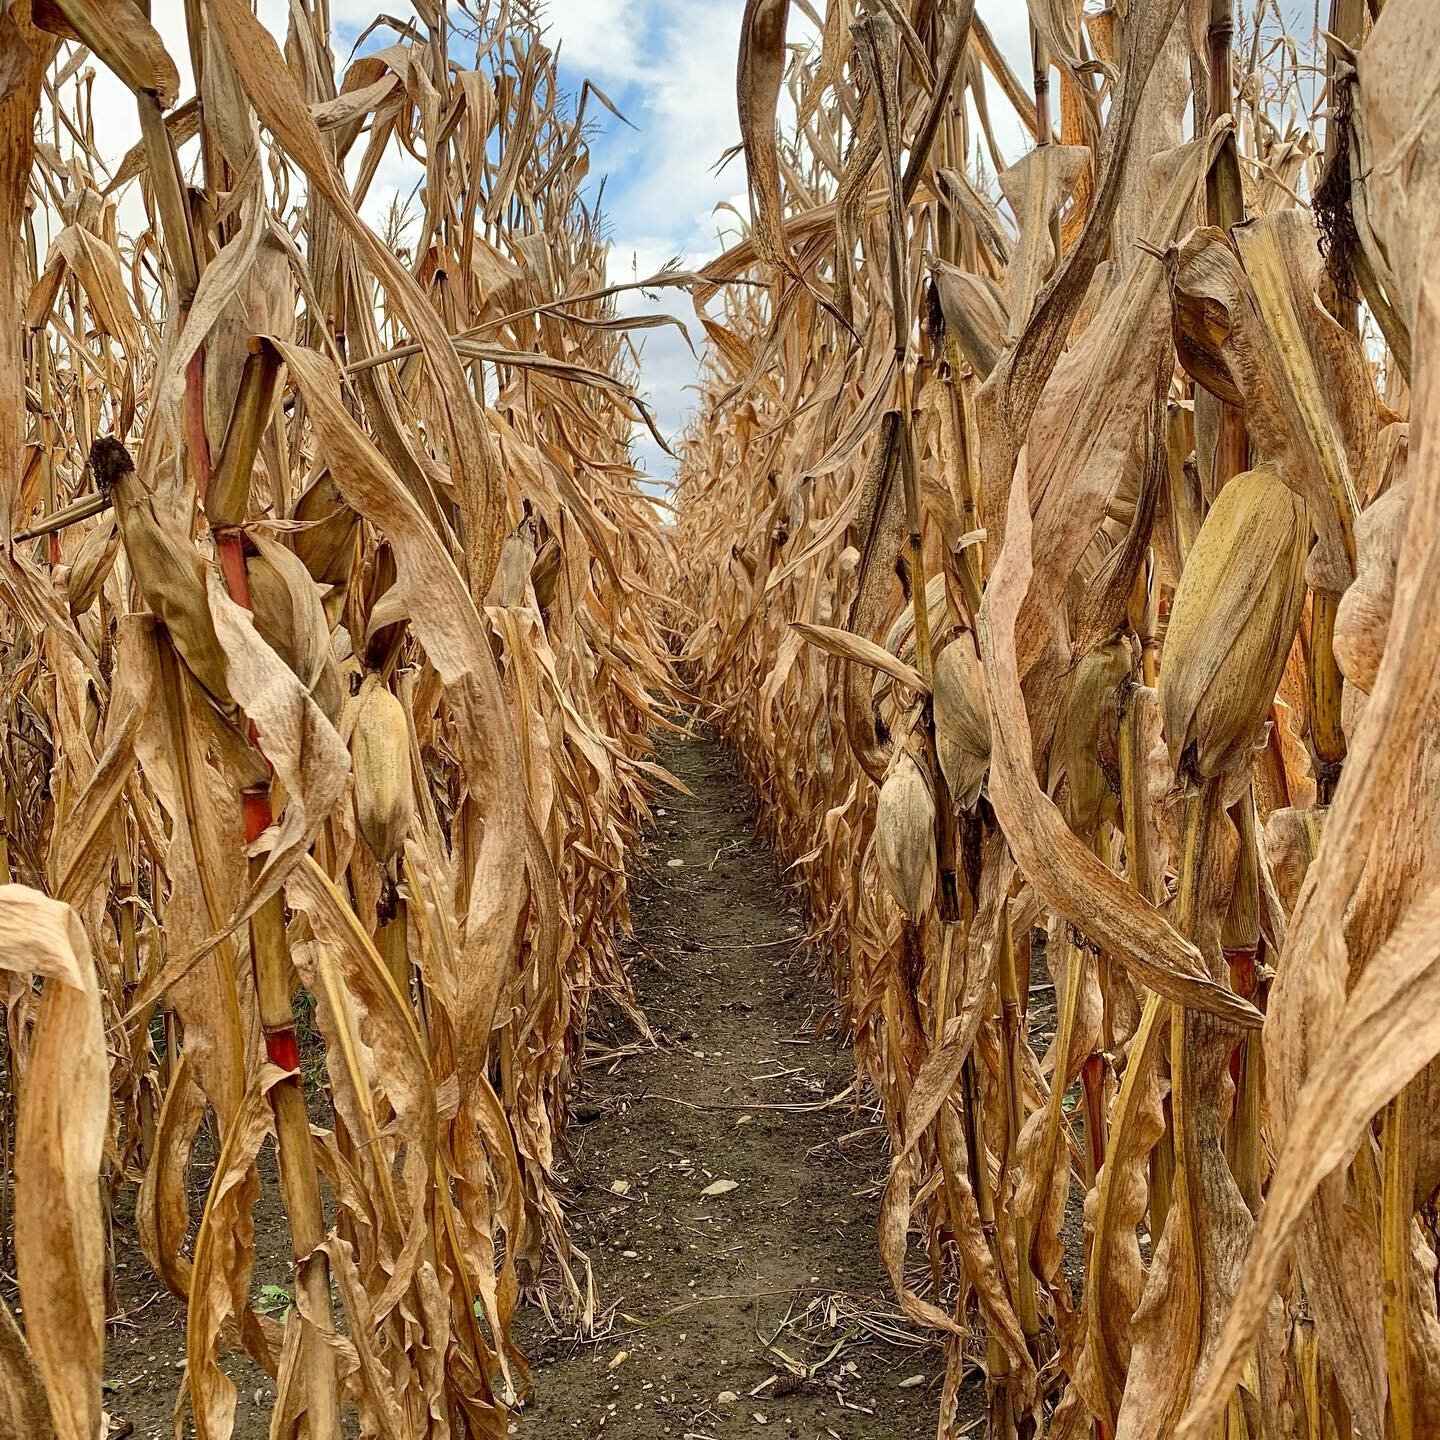 Corn maze 🌽 @percyfarm